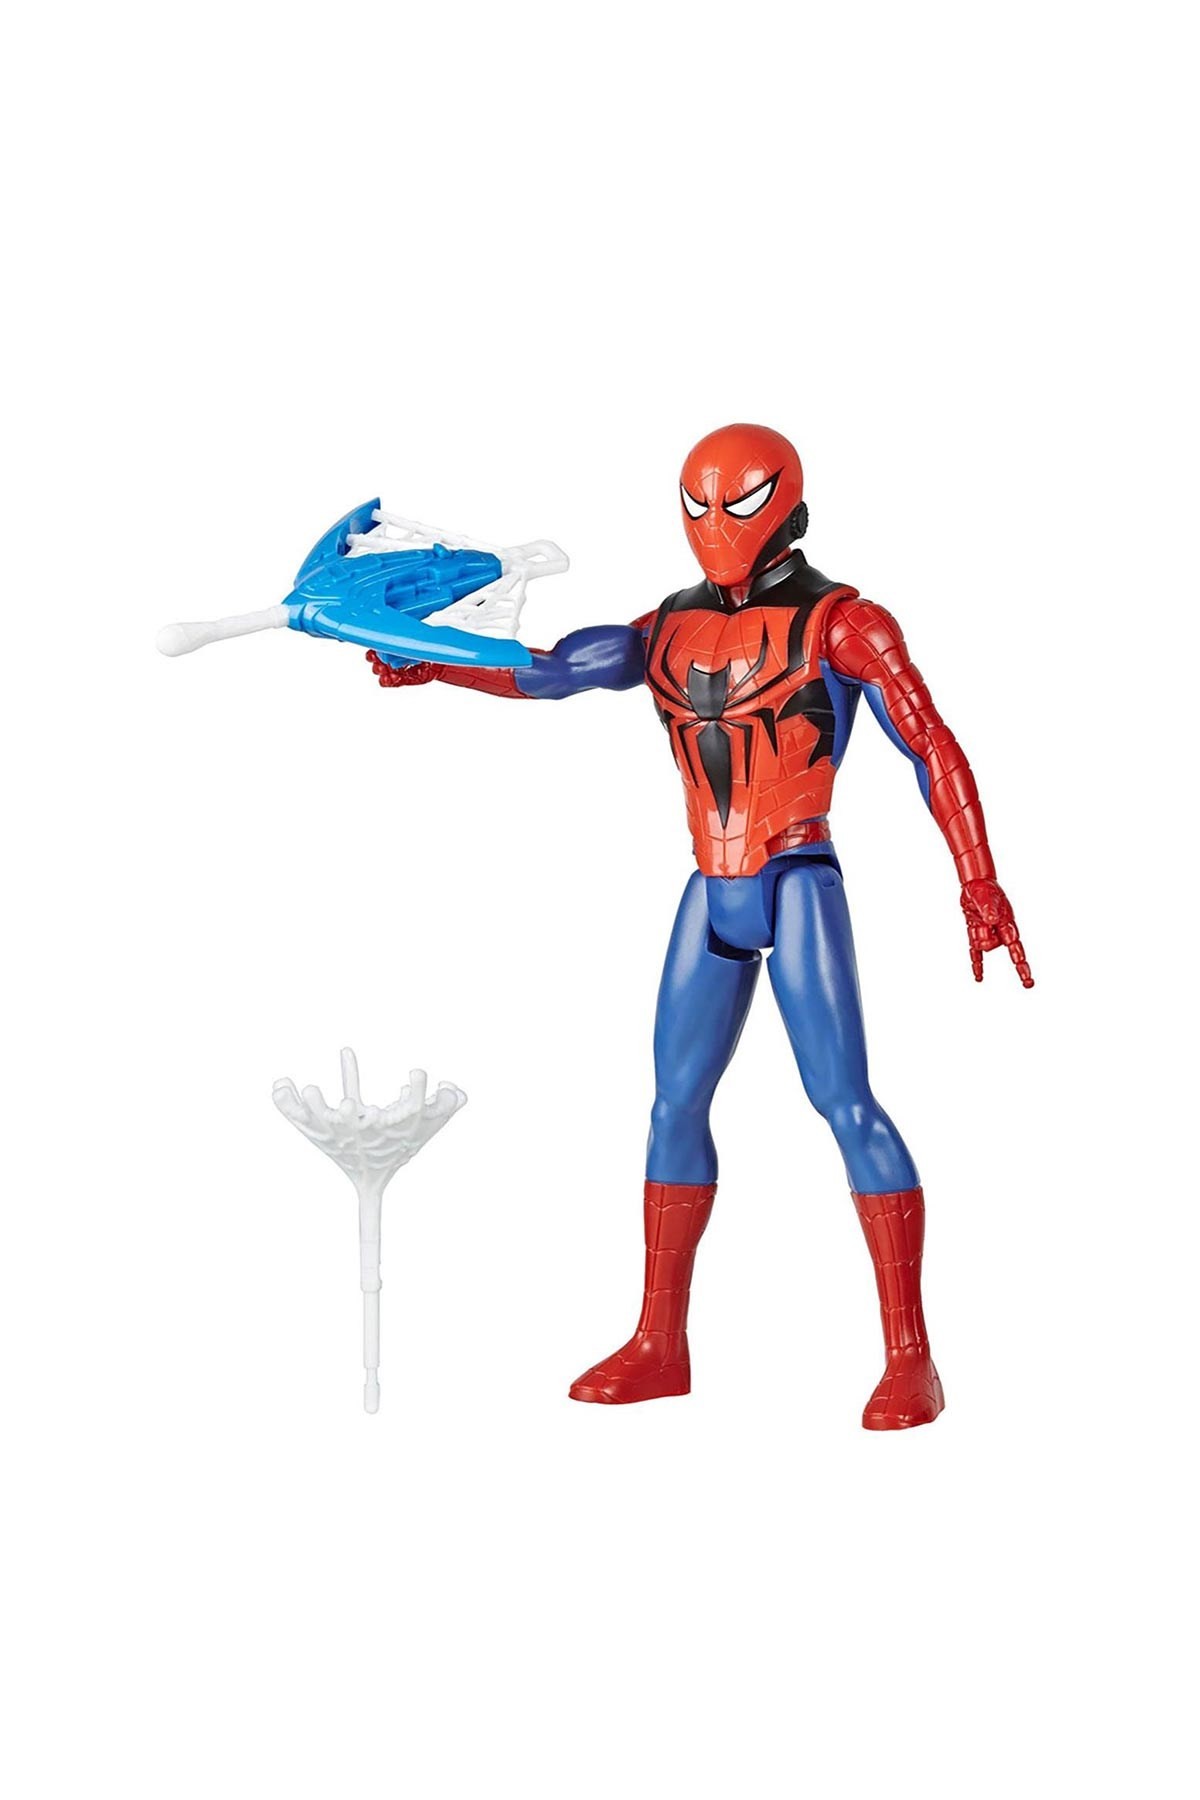 Spiderman Titan Hero Blast Gear Figür